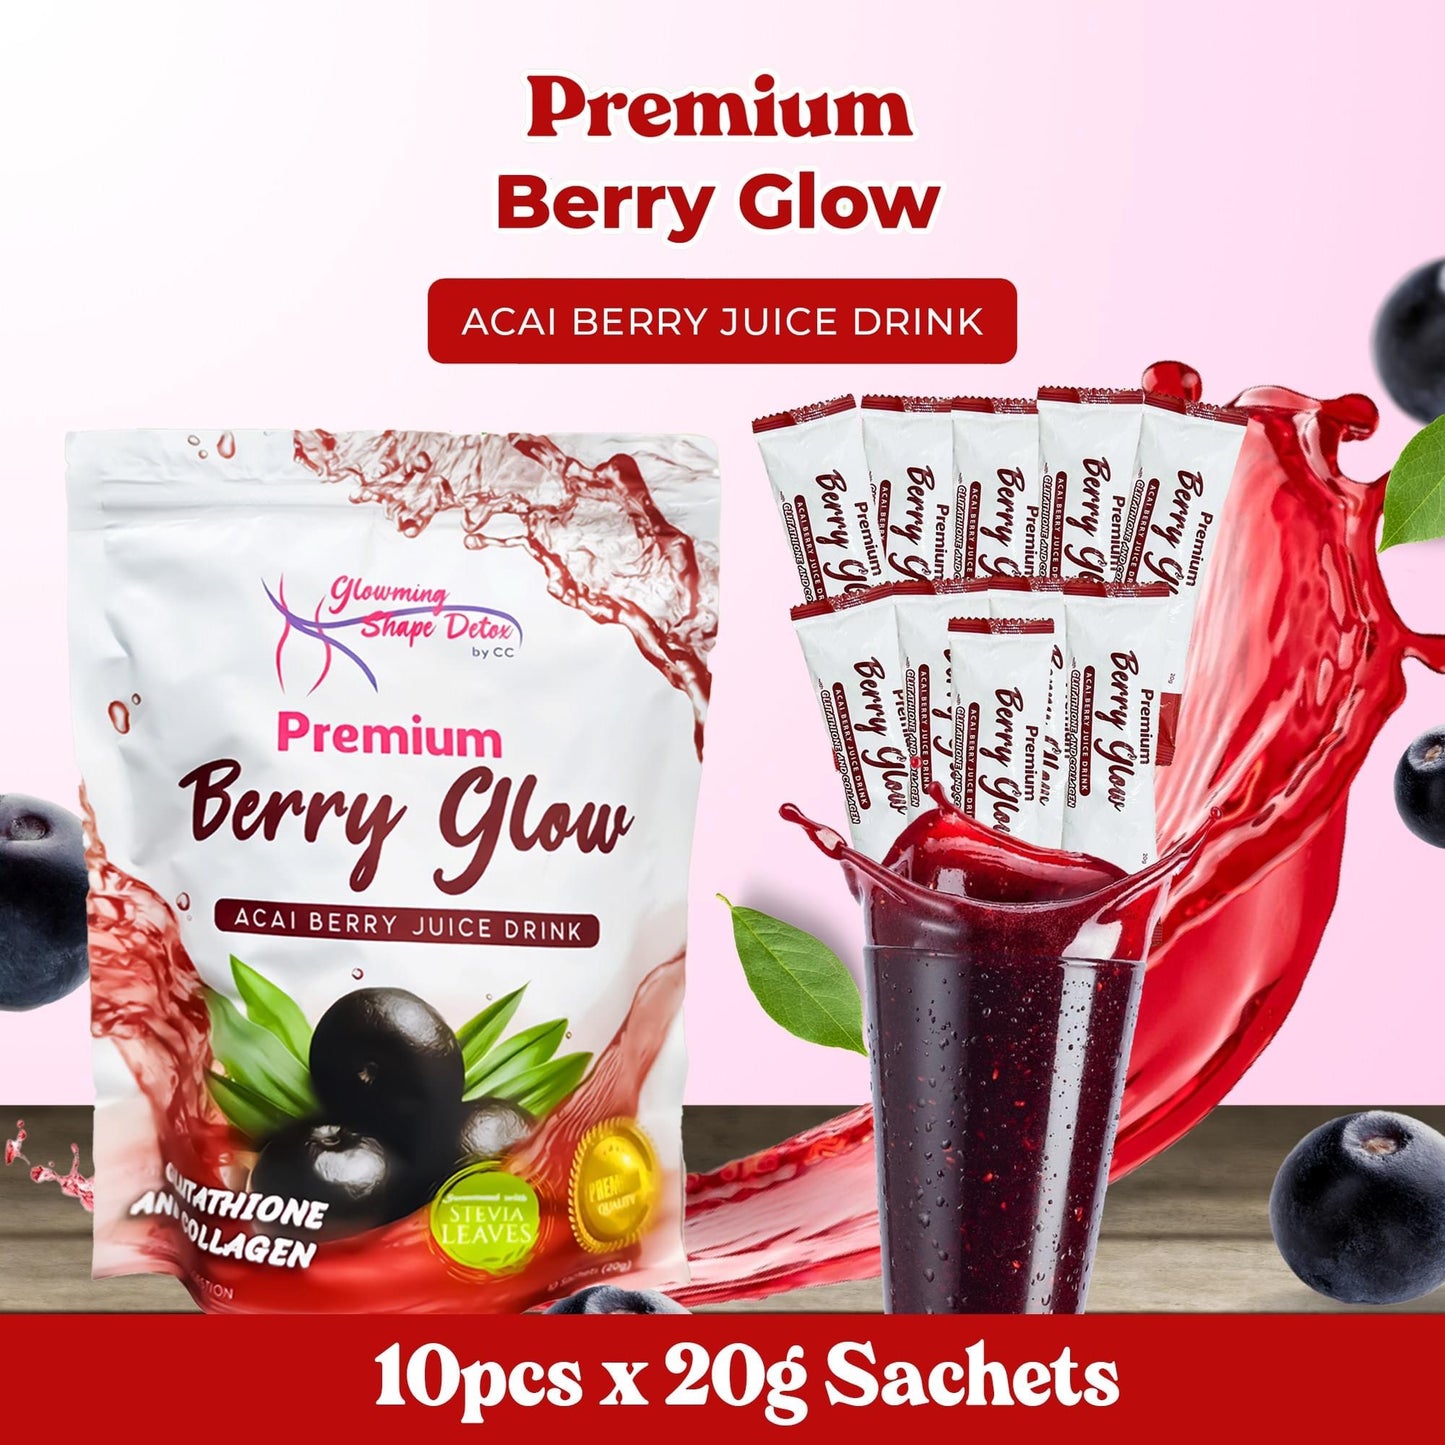 Glowming Shape Detox -Premium Berry Glow 10 x 20g